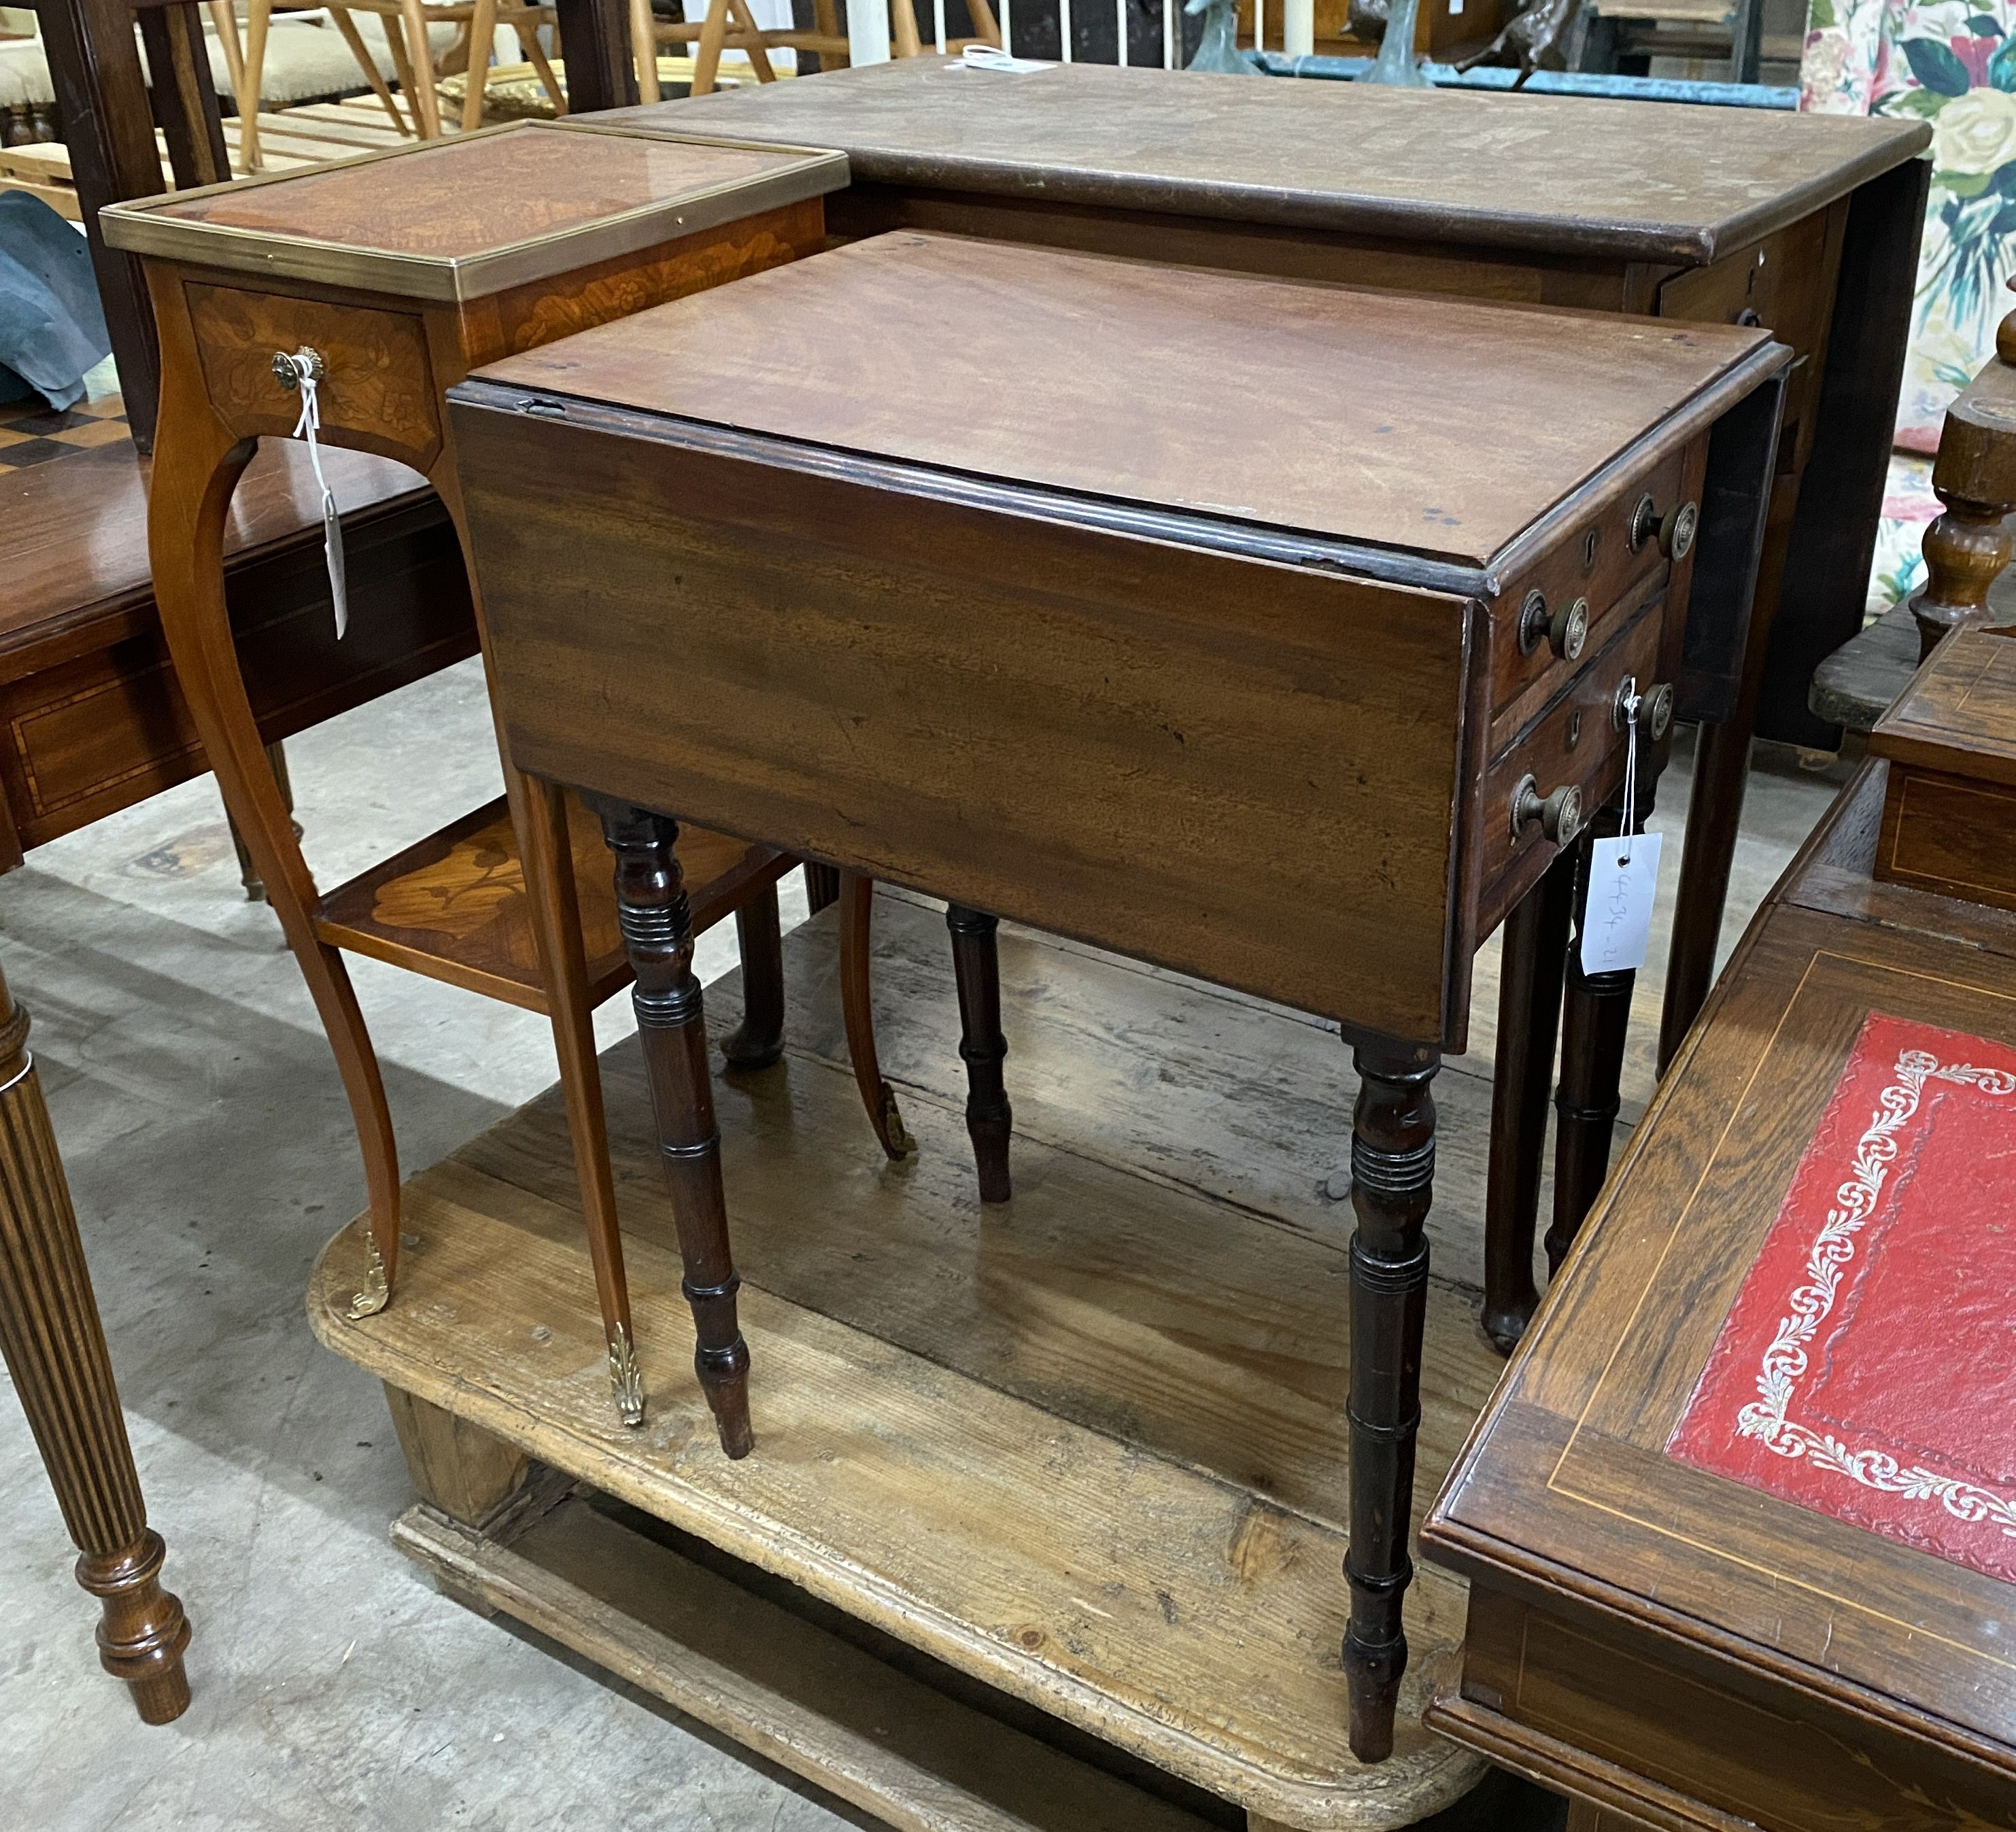 A Regency mahogany drop flap work table, width 50cm, depth 35cm, height 84cm